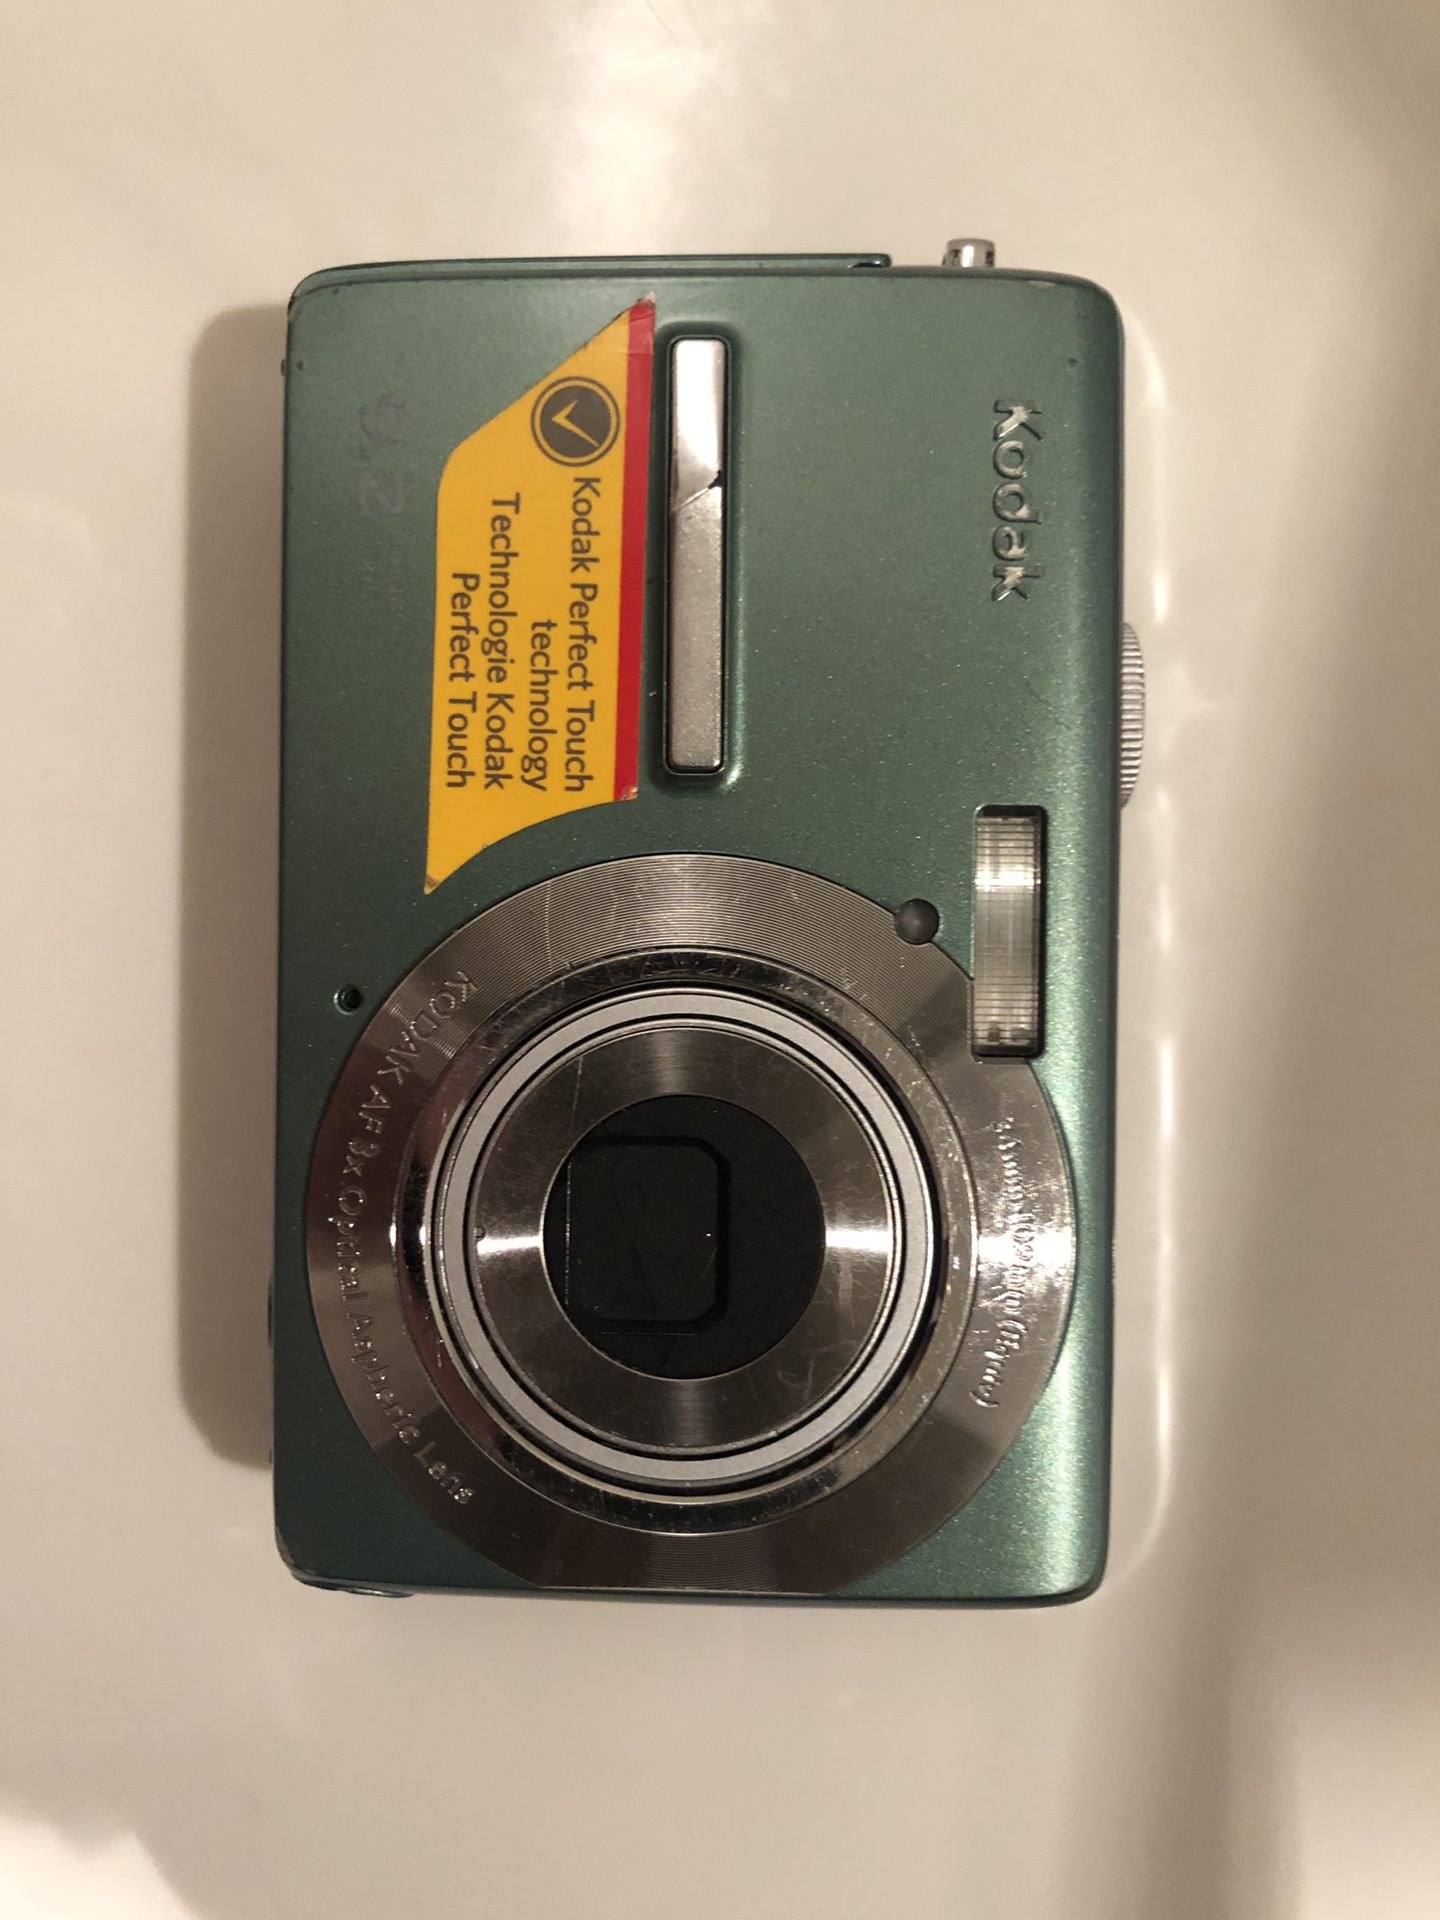 Kodak Digital Camera with case